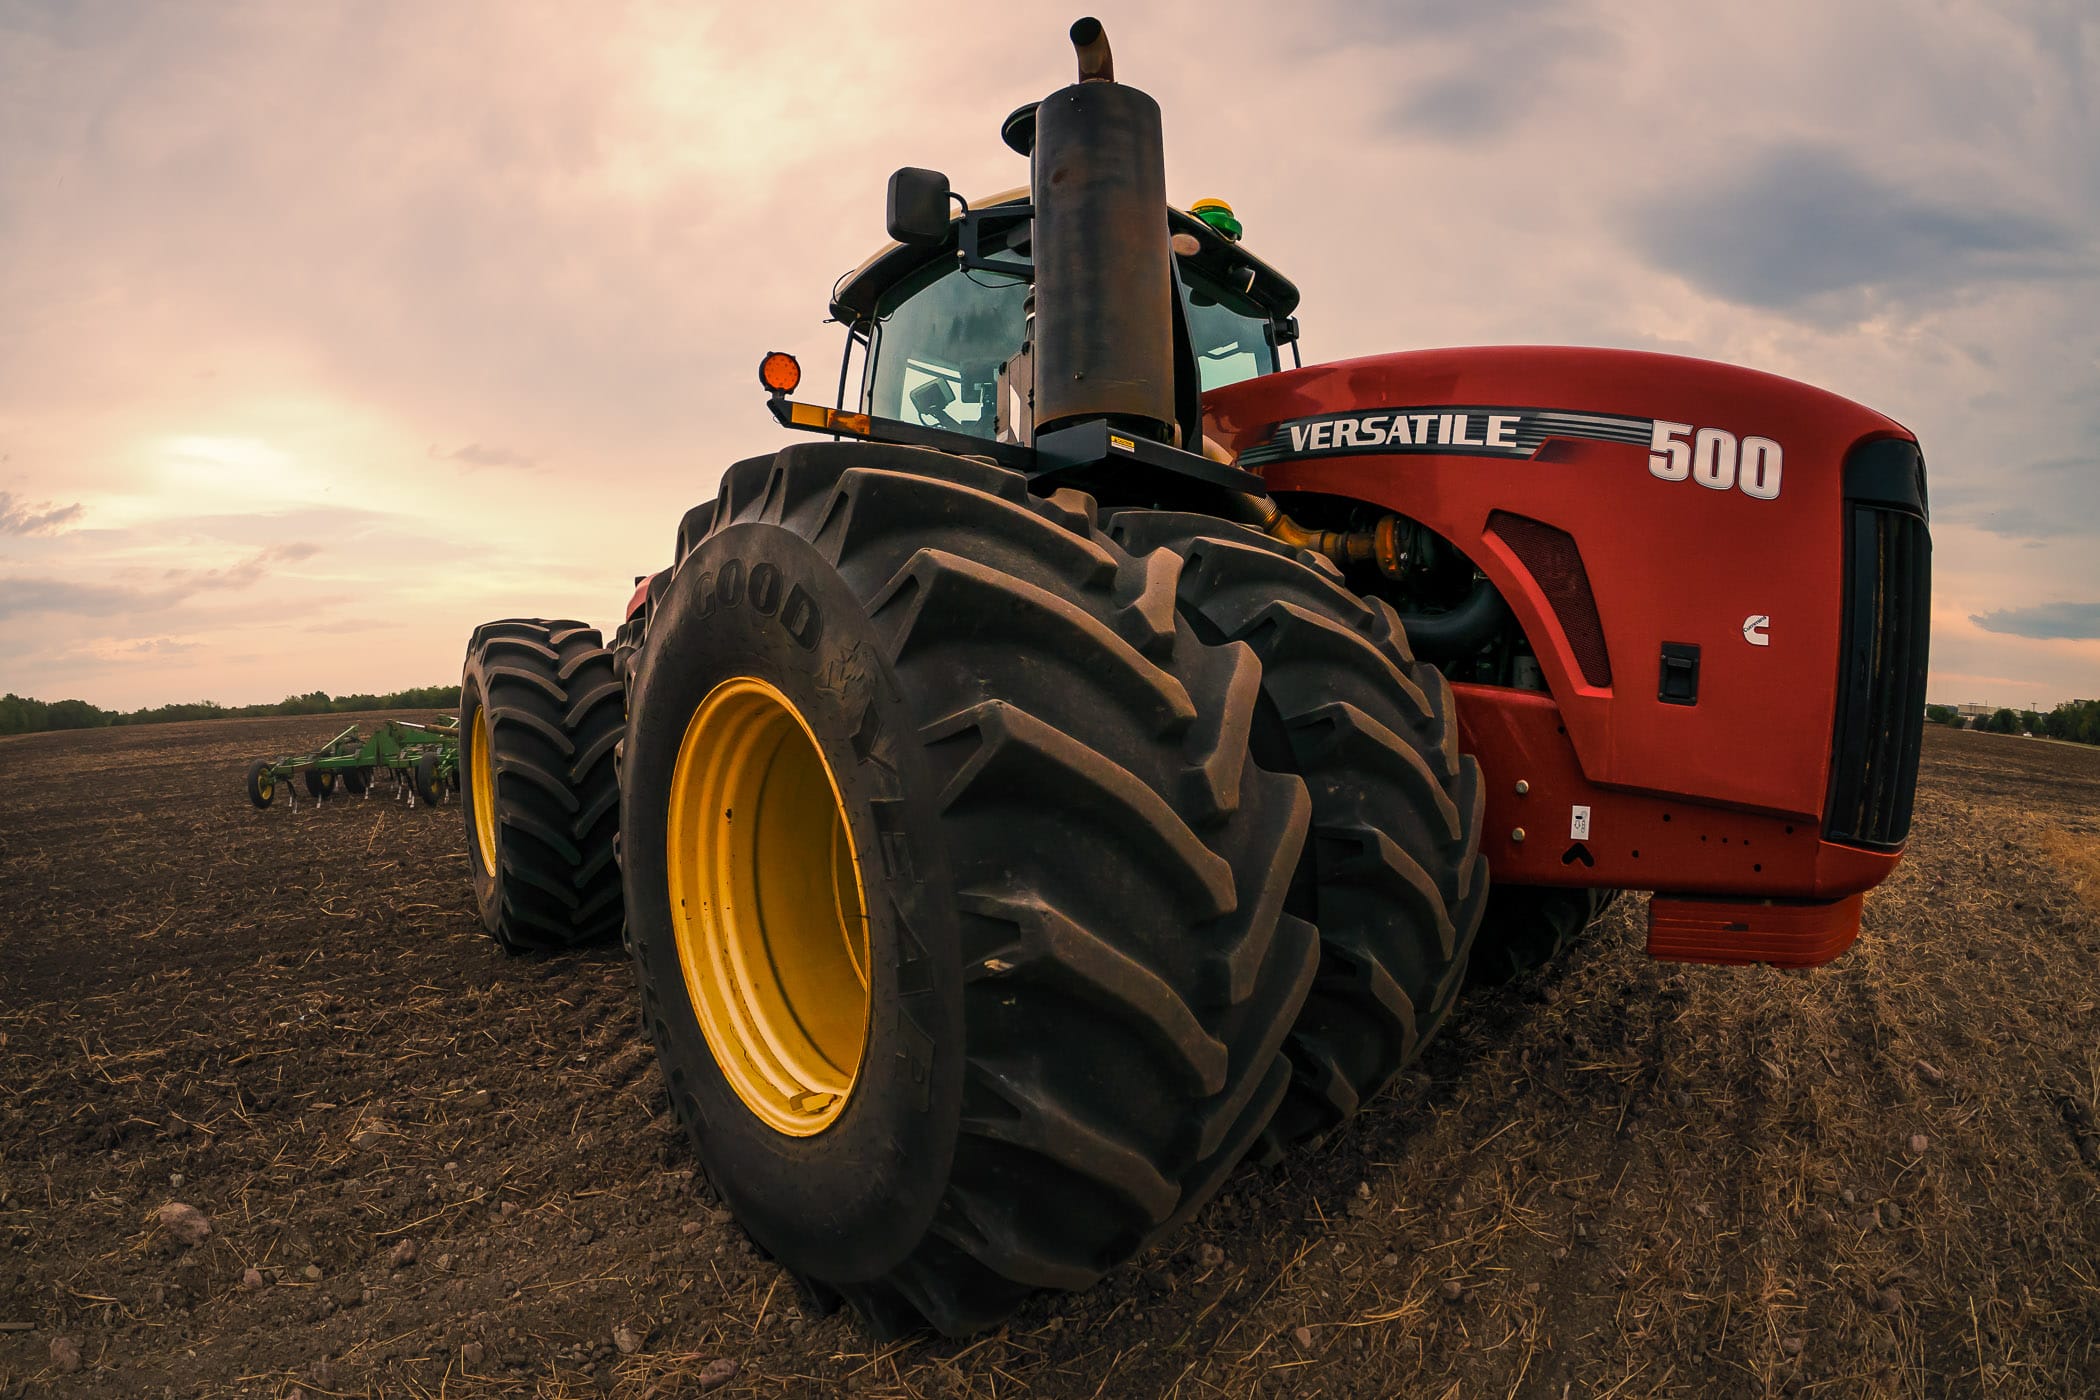 Detail of a Versatile tractor on a farm near McKinney, Texas.